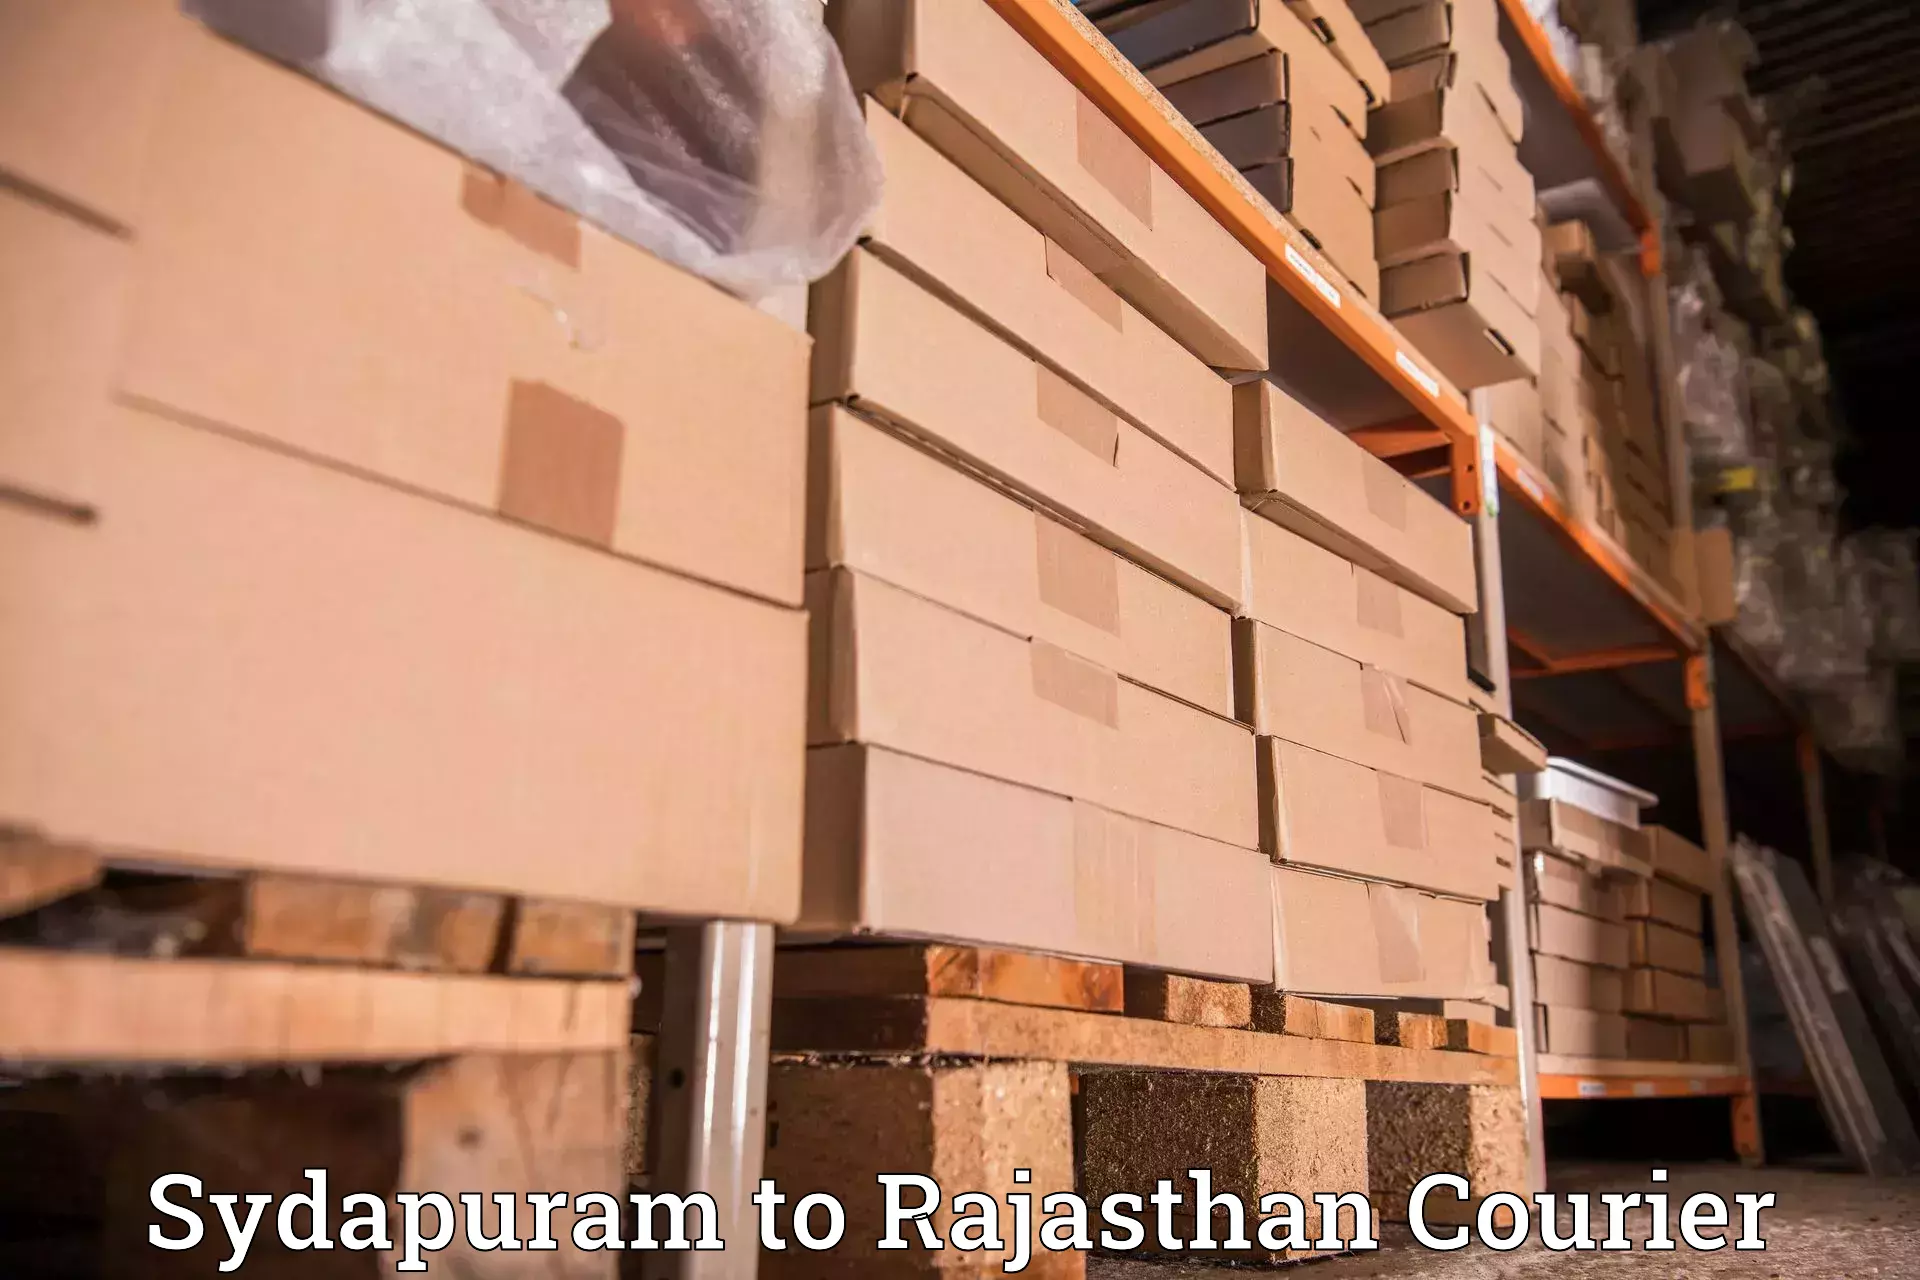 Efficient order fulfillment Sydapuram to Mathania